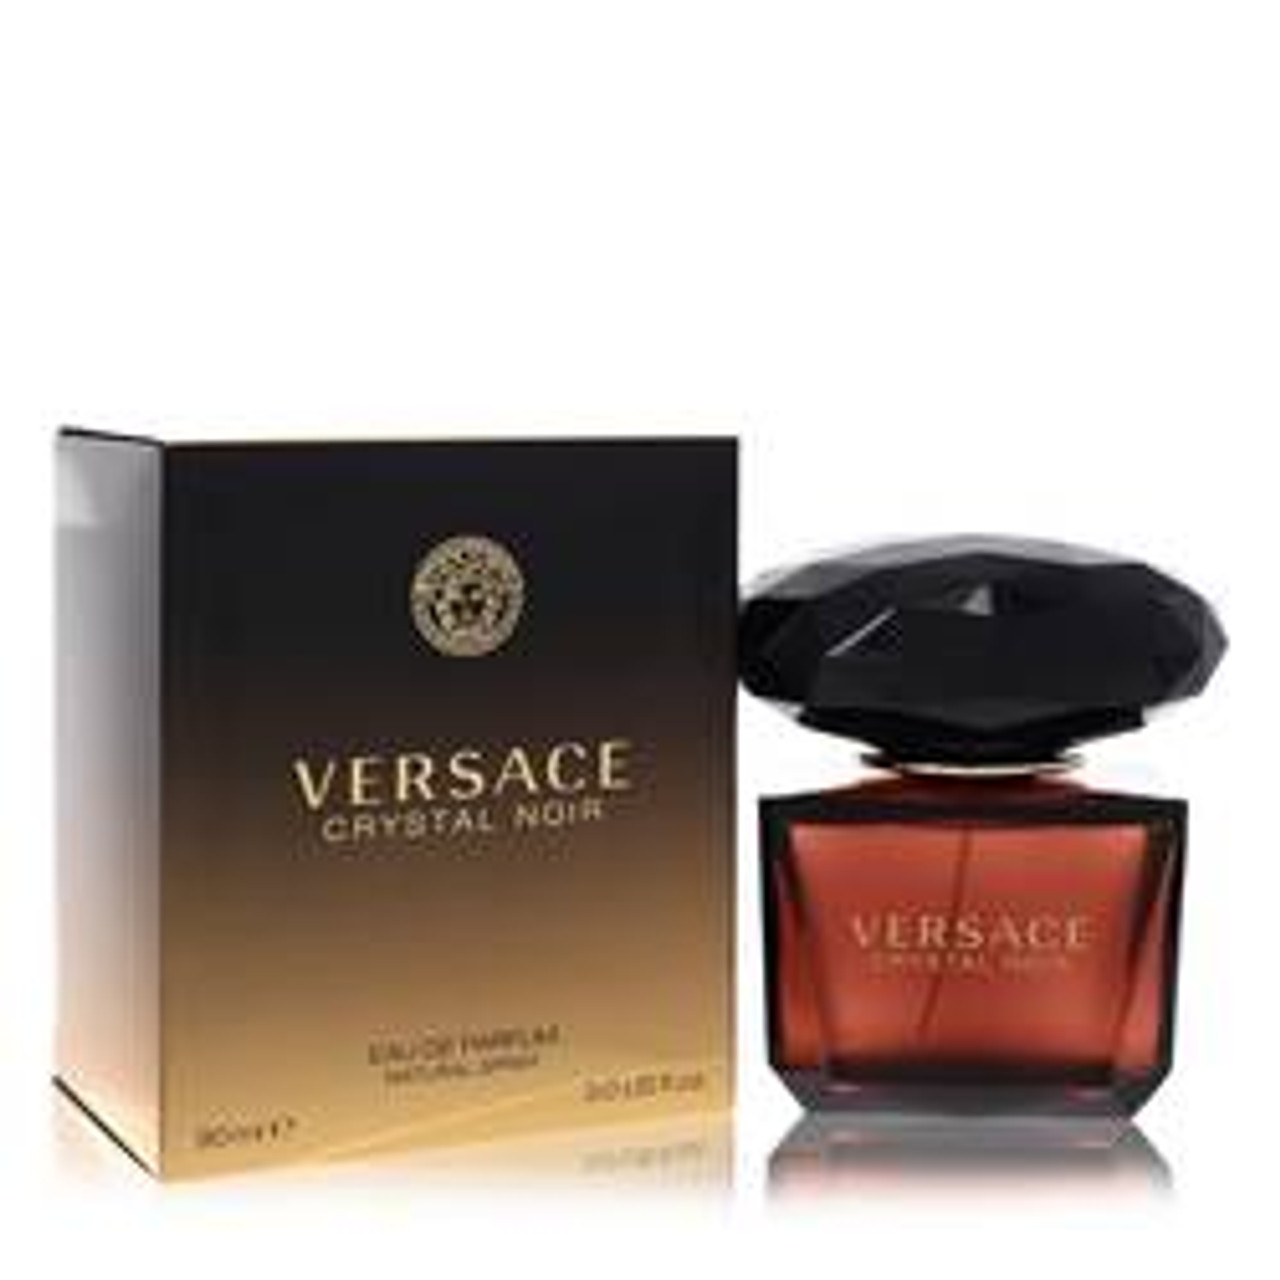 Crystal Noir Perfume By Versace Eau De Parfum Spray 3 oz for Women - *Pre-Order